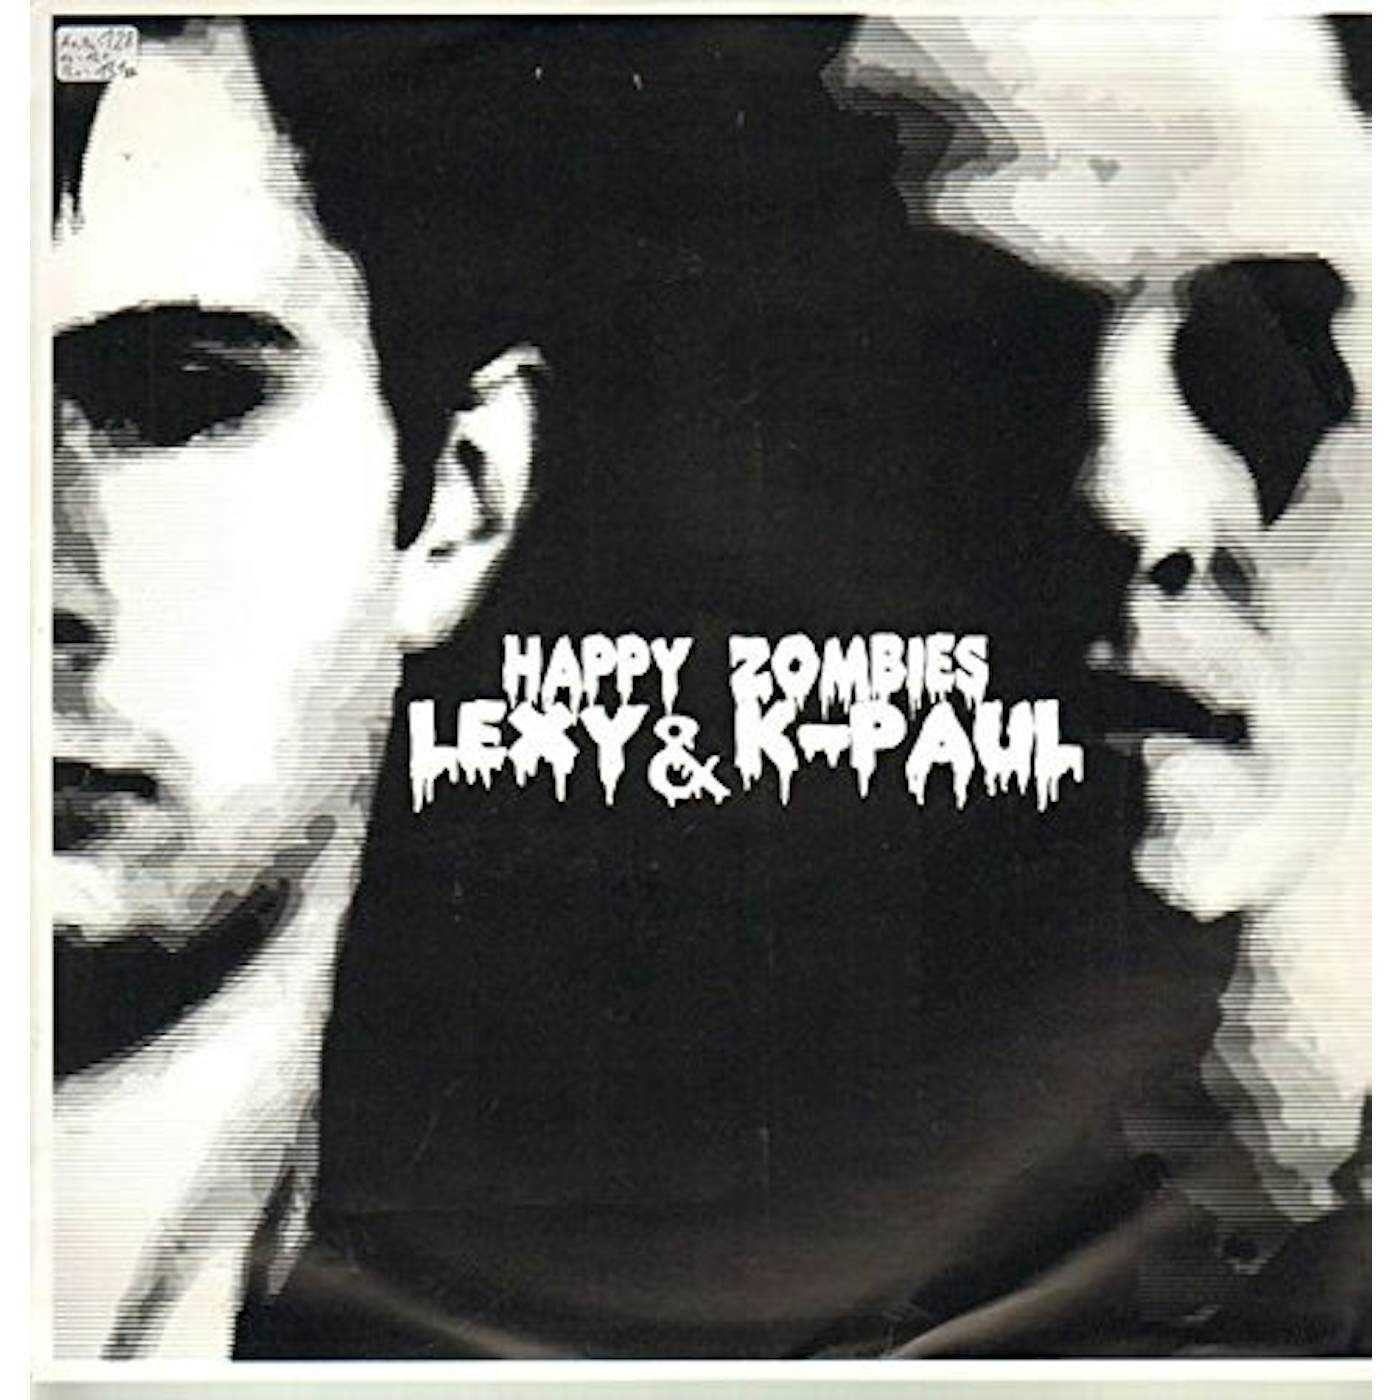 Lexy & K-Paul Happy Zombies Vinyl Record